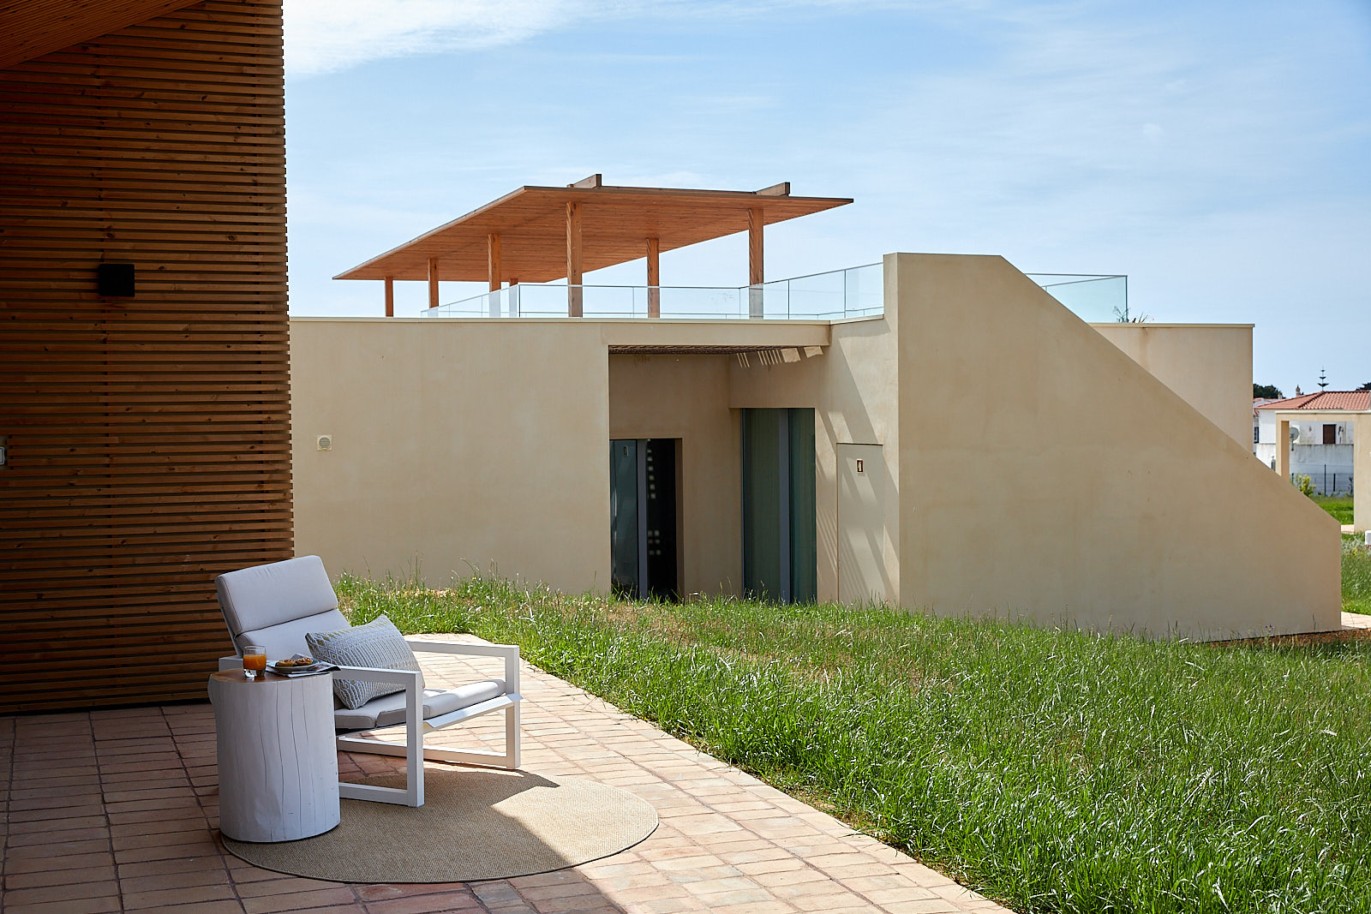 2 bedroom apartment in resort, for sale in Porches, Algarve_230557